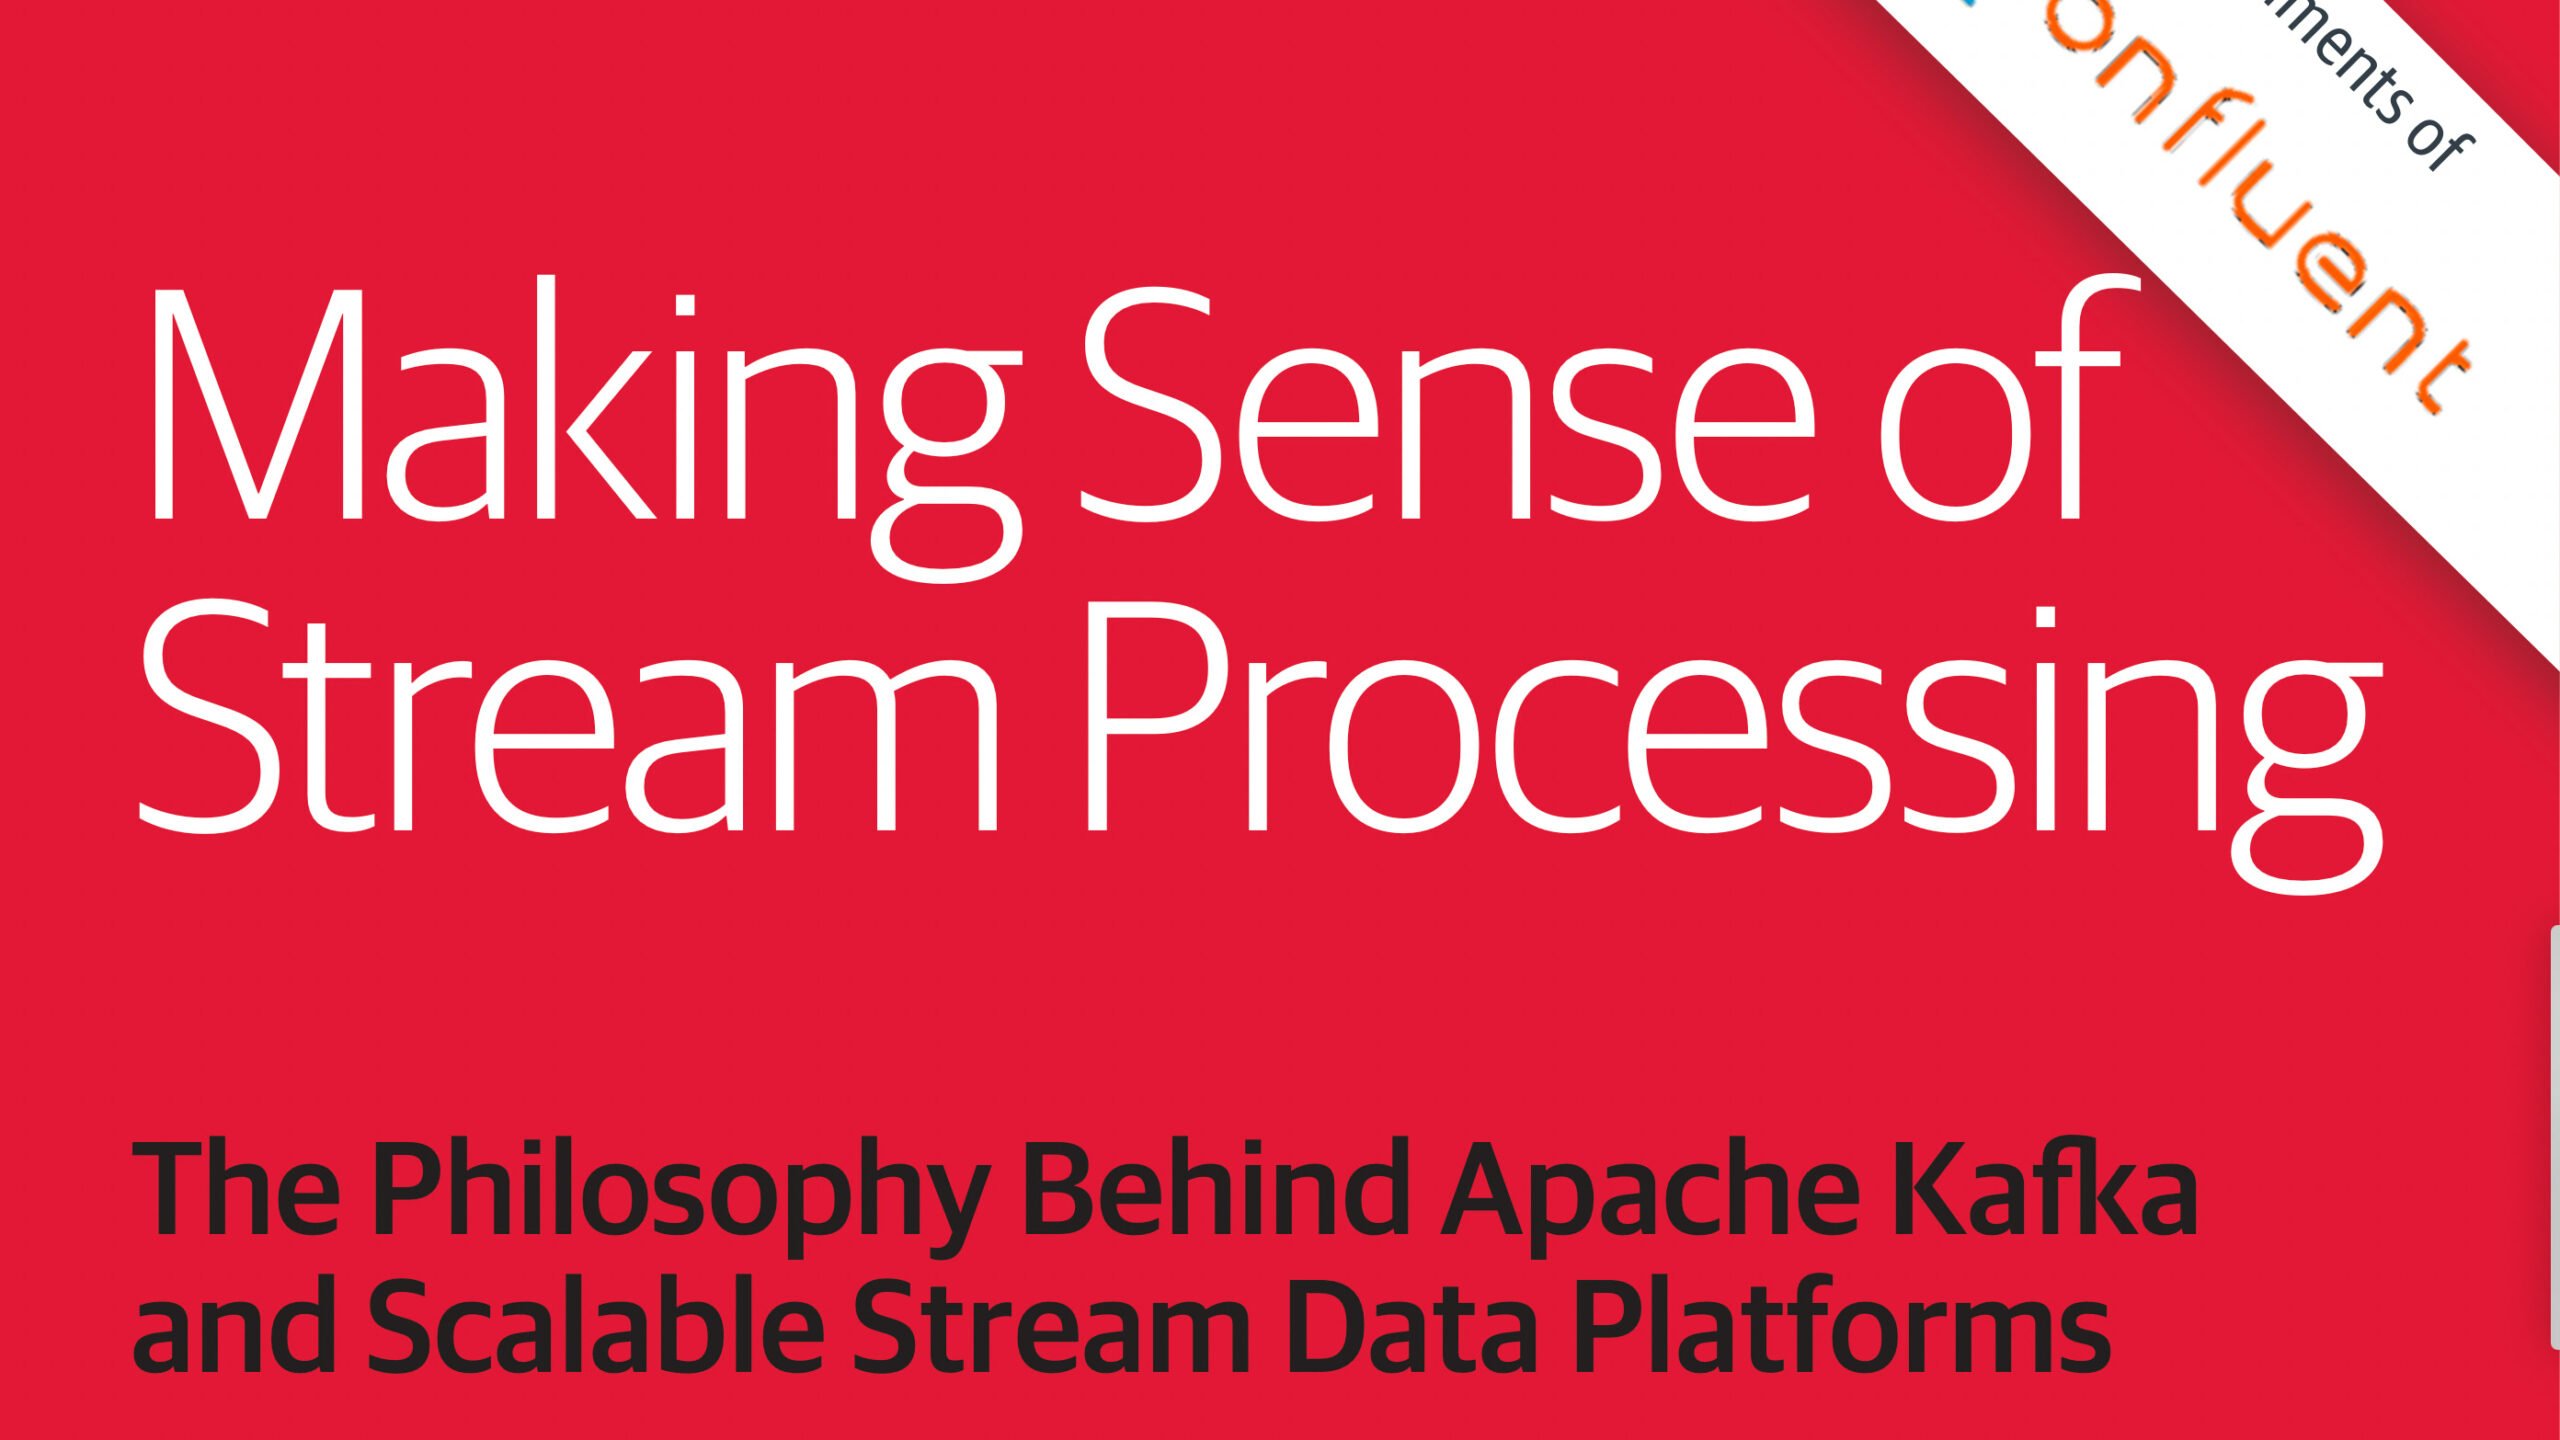 2. Making sense of stream processing